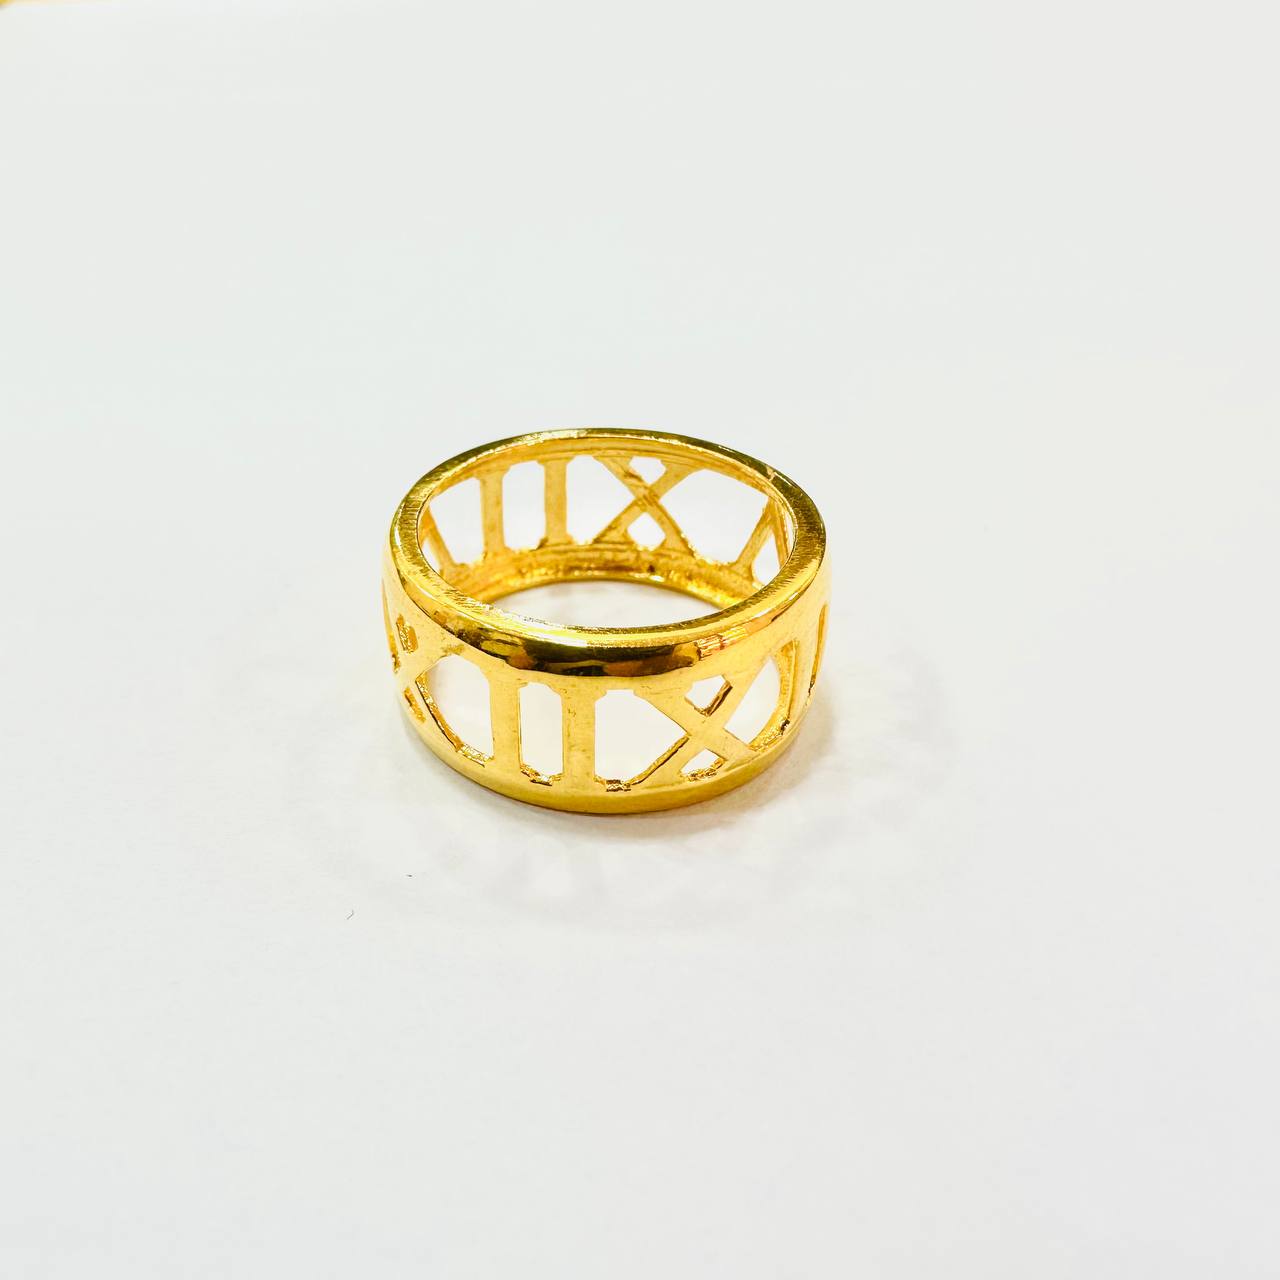 22k / 916 Gold Roman Ring Wide-916 gold-Best Gold Shop